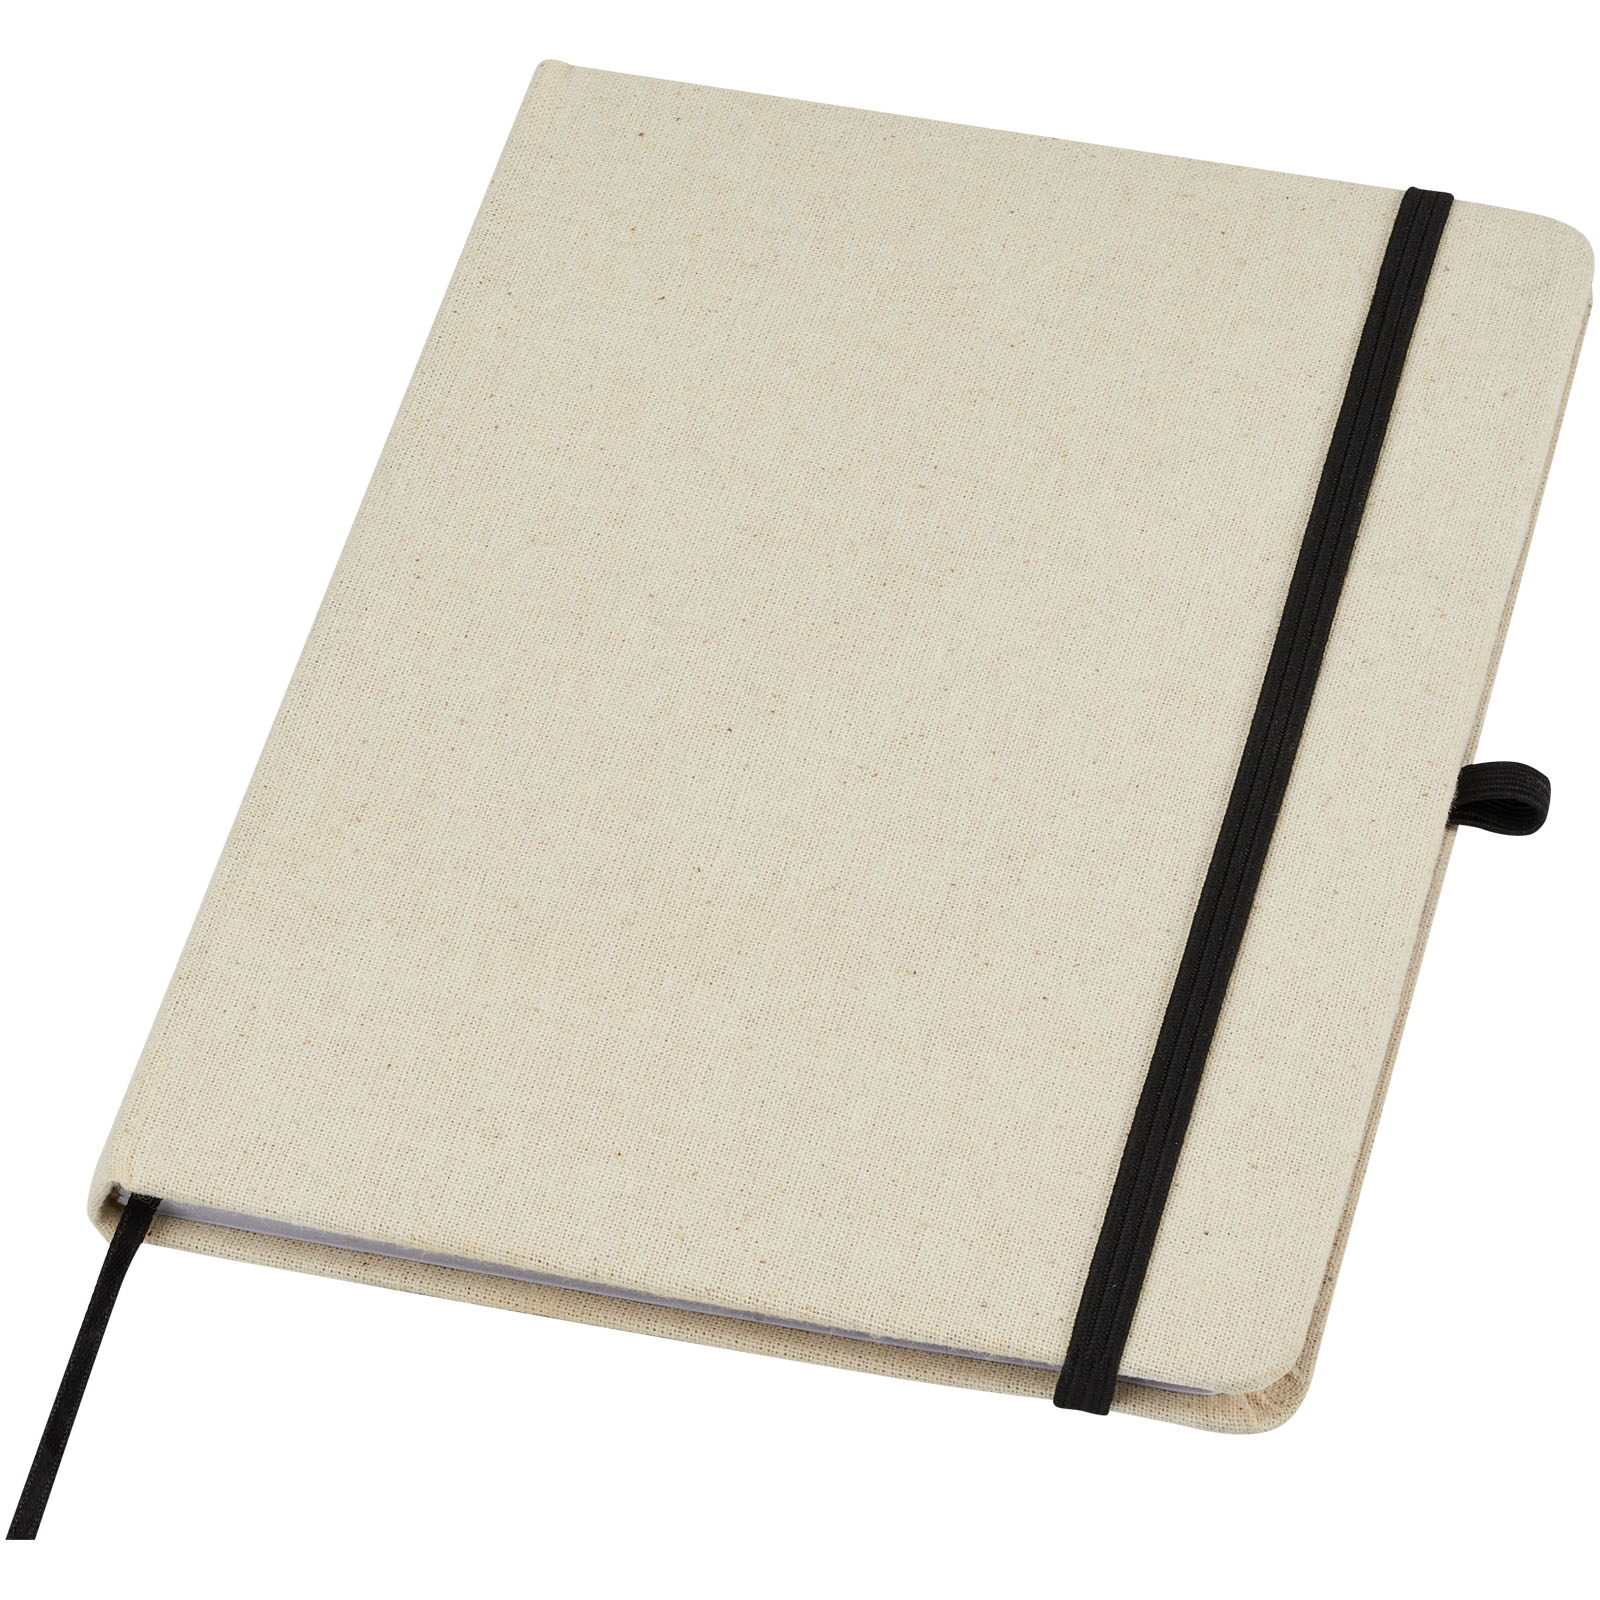 Advertising Hard cover notebooks - Tutico organic cotton hardcover notebook